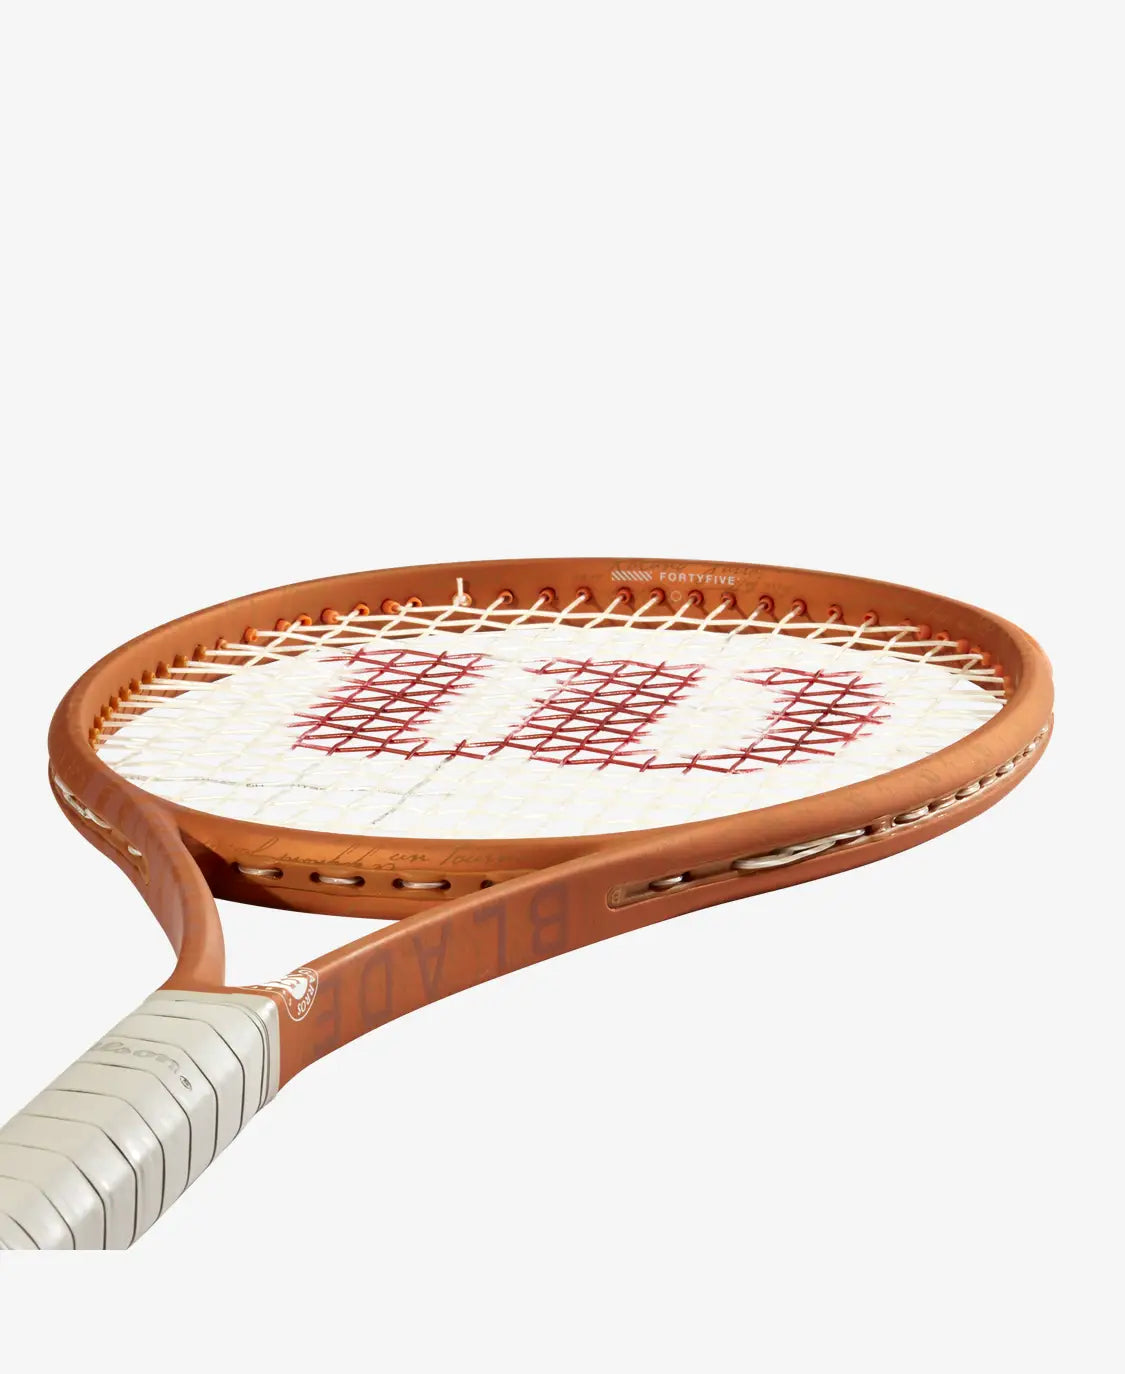 Wilson x Roland Garros Blade 98 v8 (305g) racket - Clay Limited ...